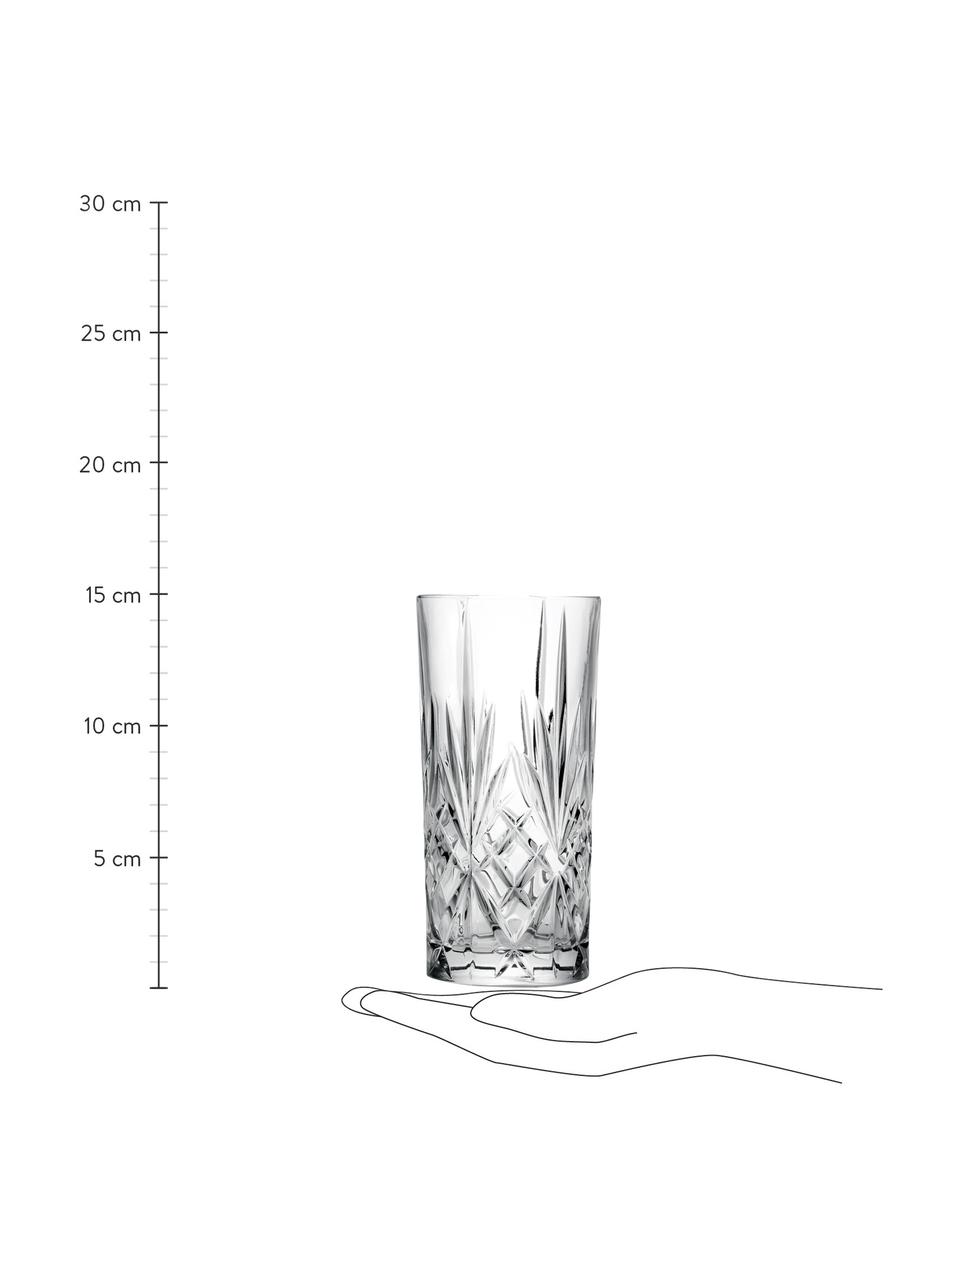 Set 4 bicchieri long drink in cristallo Bichiera, Cristallo, Trasparente, Ø 7 x Alt. 15 cm, 360 ml